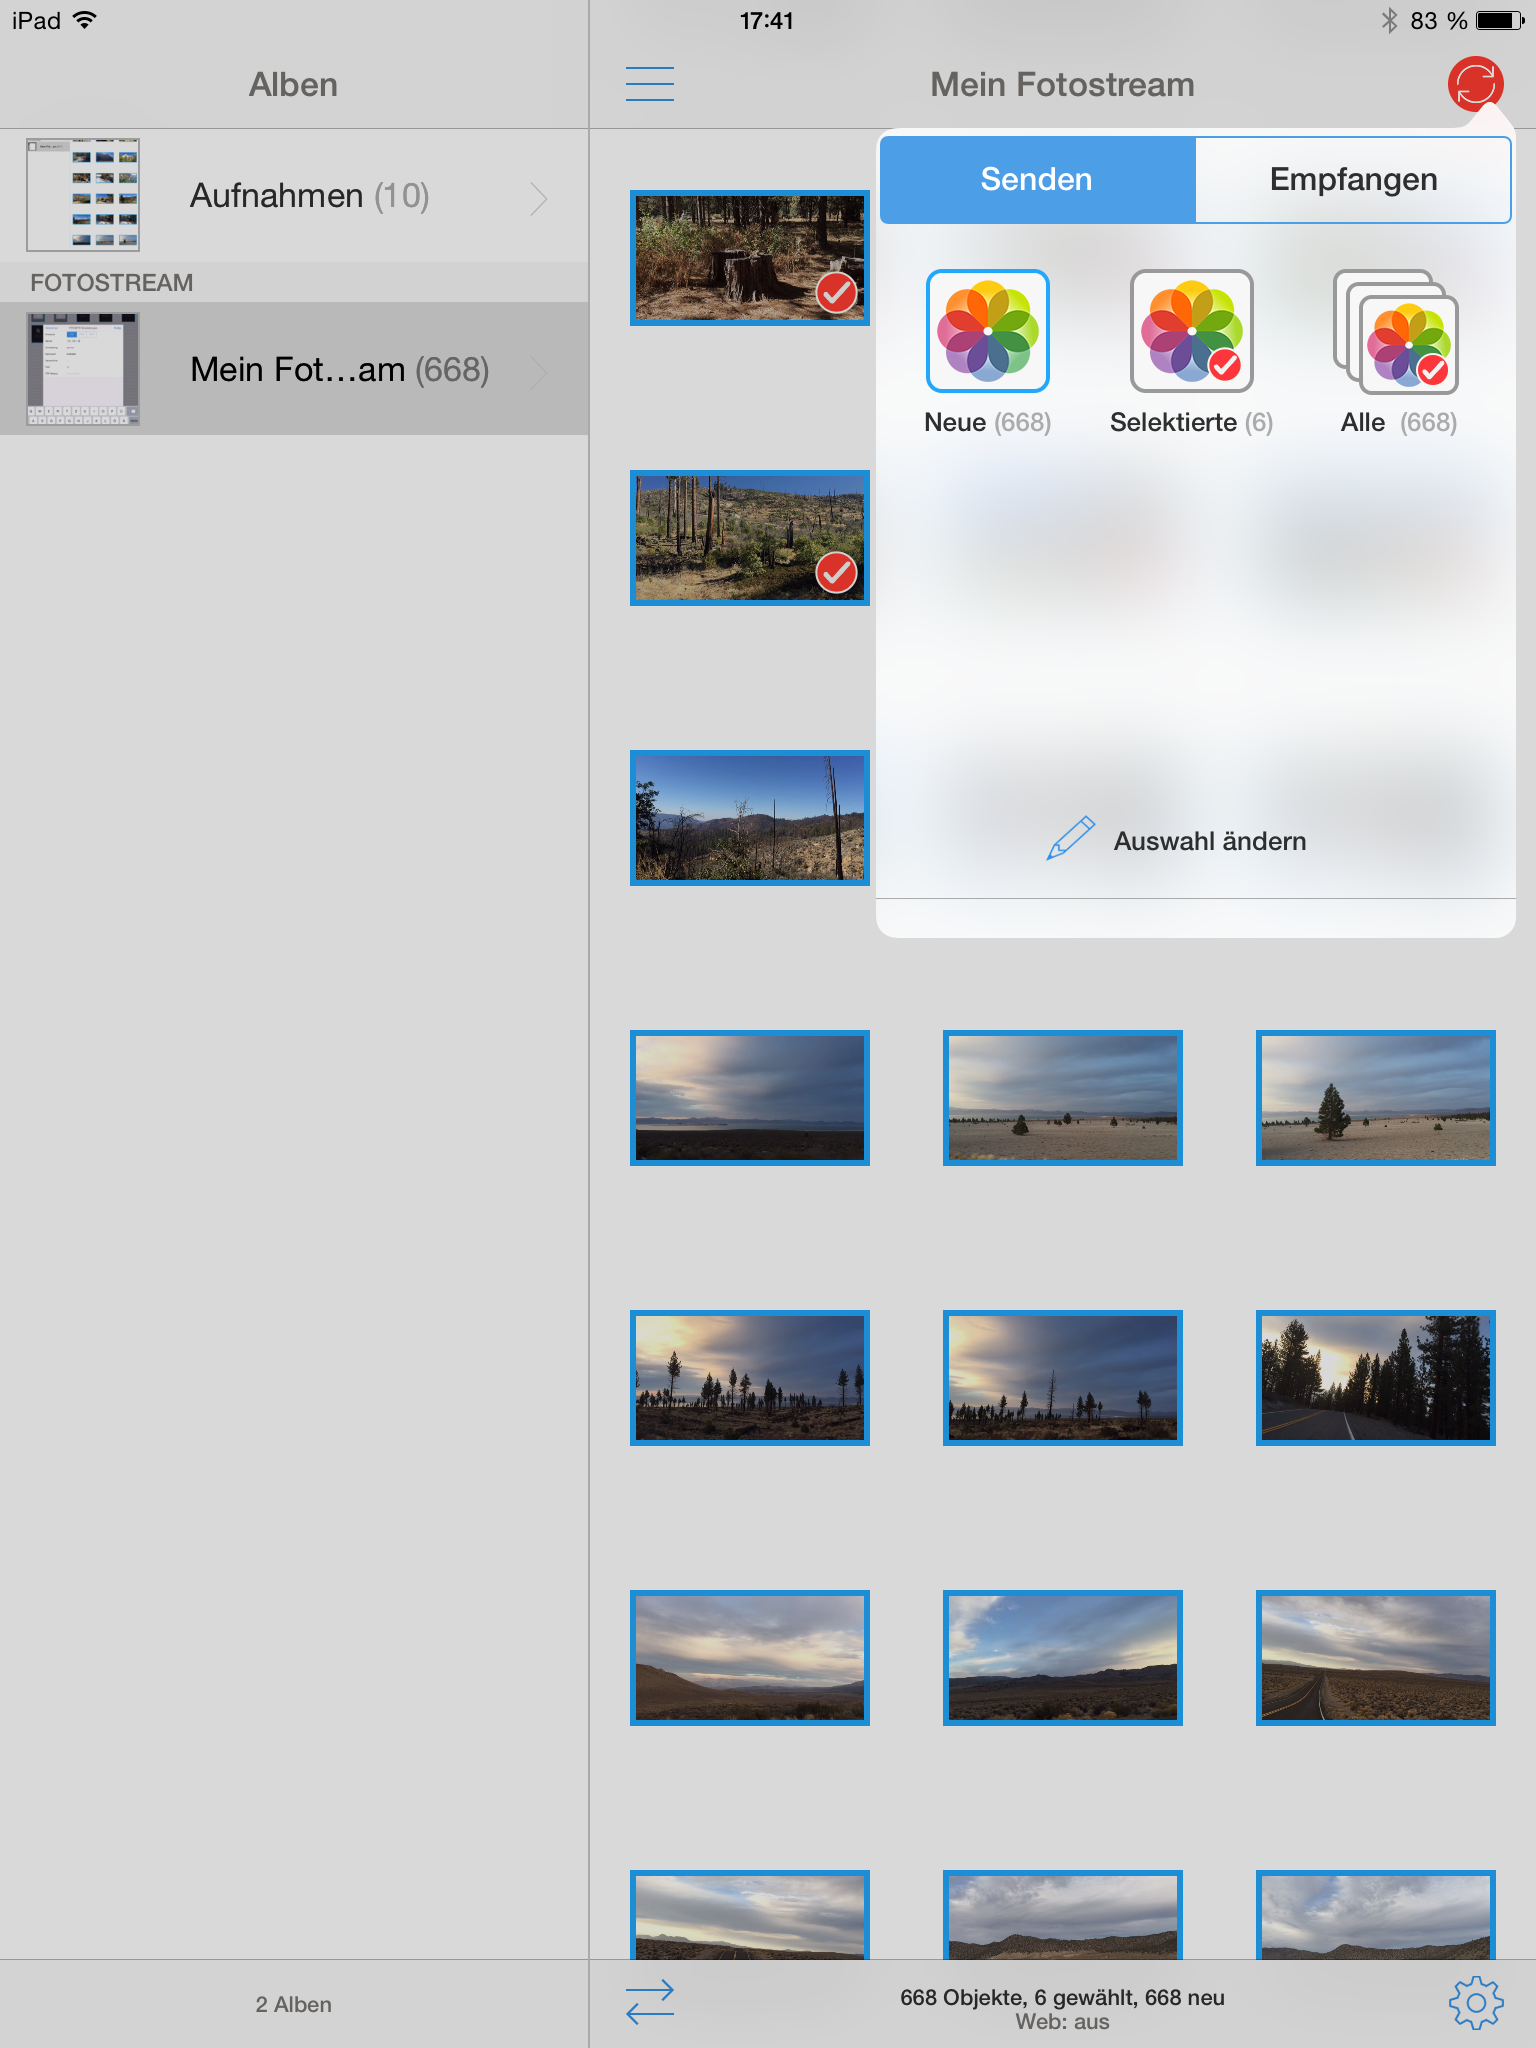 iOS (iPhone + iPad) - Bilder ohne iTunes per WLAN syncronisieren 9